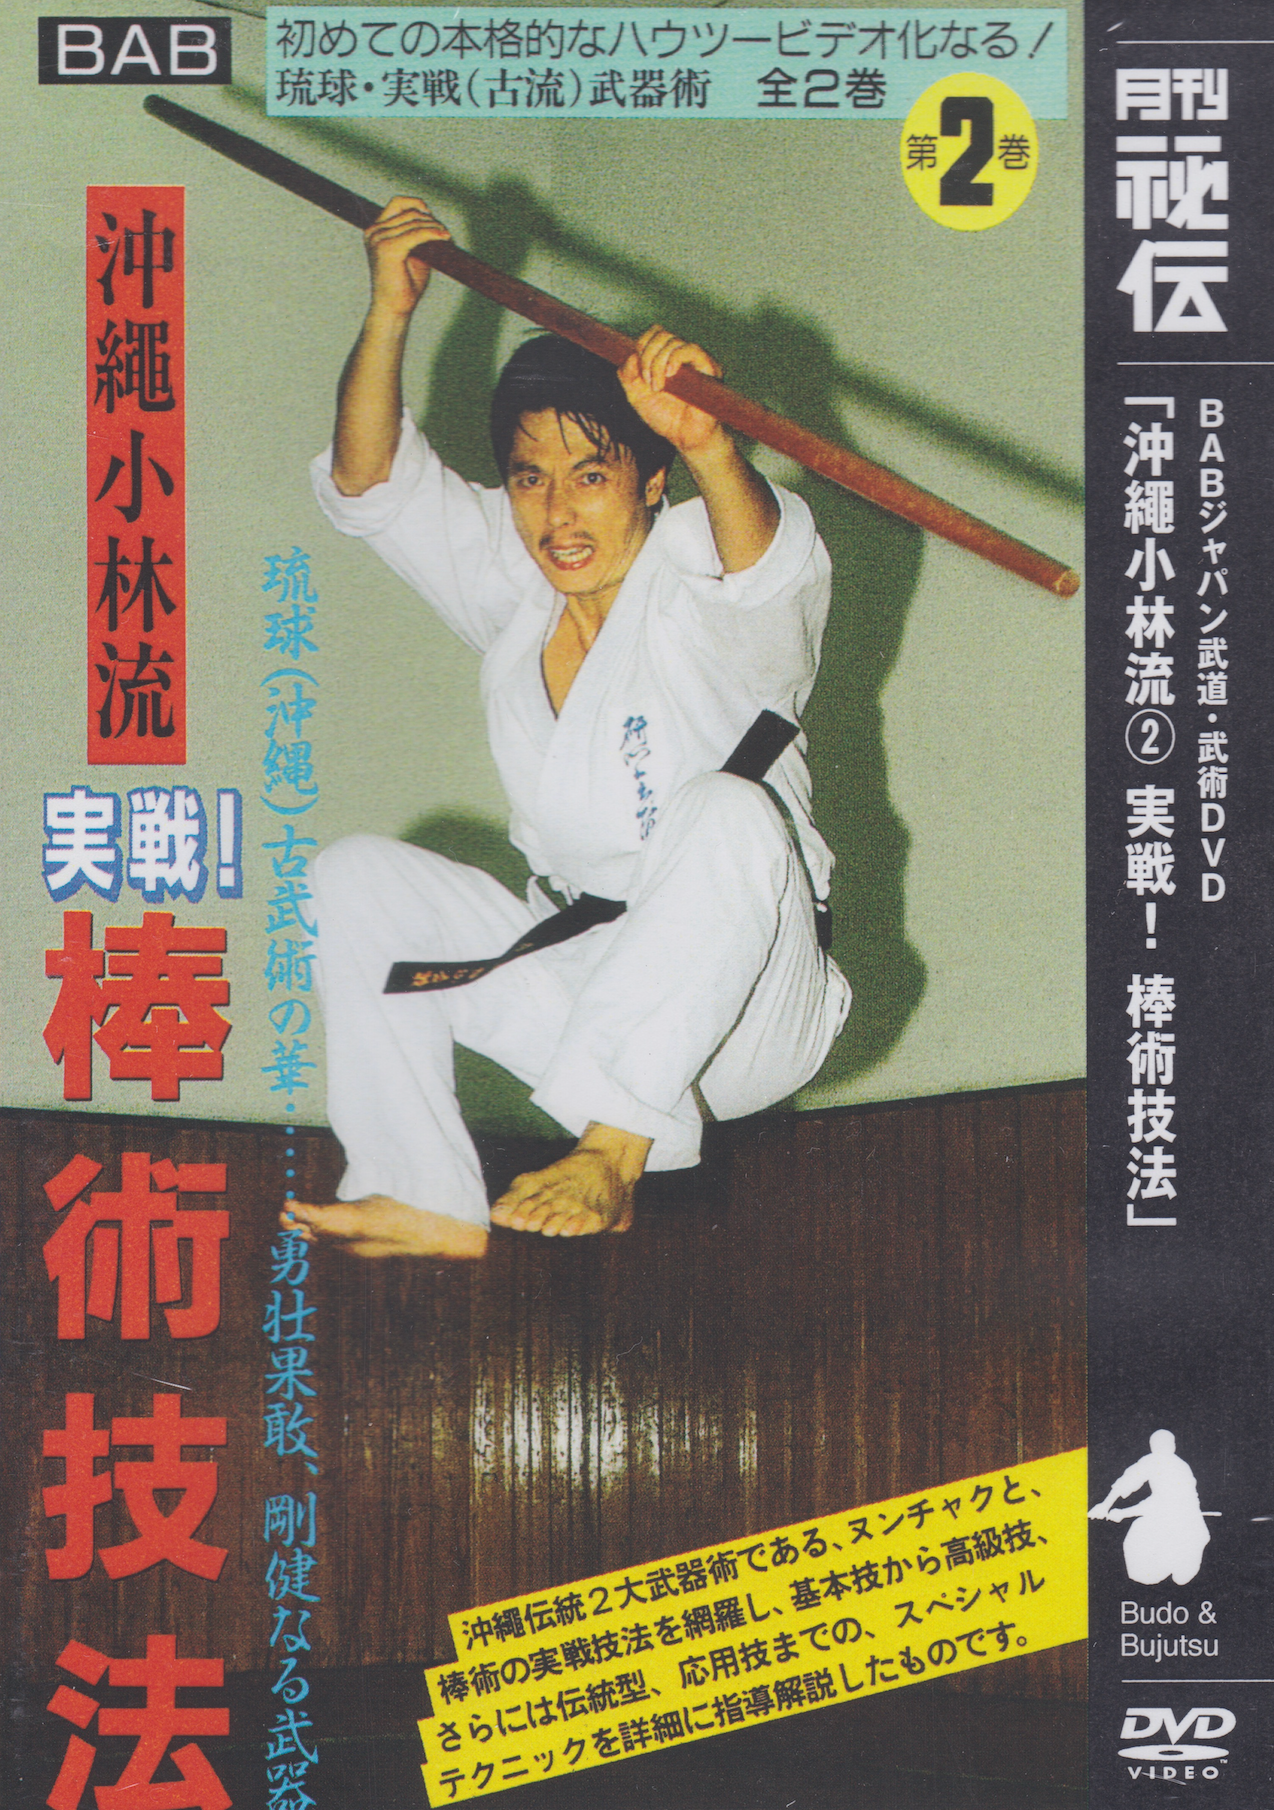 Lucha real: DVD Art of Bo Fighting con Kazumasa Yokoyama